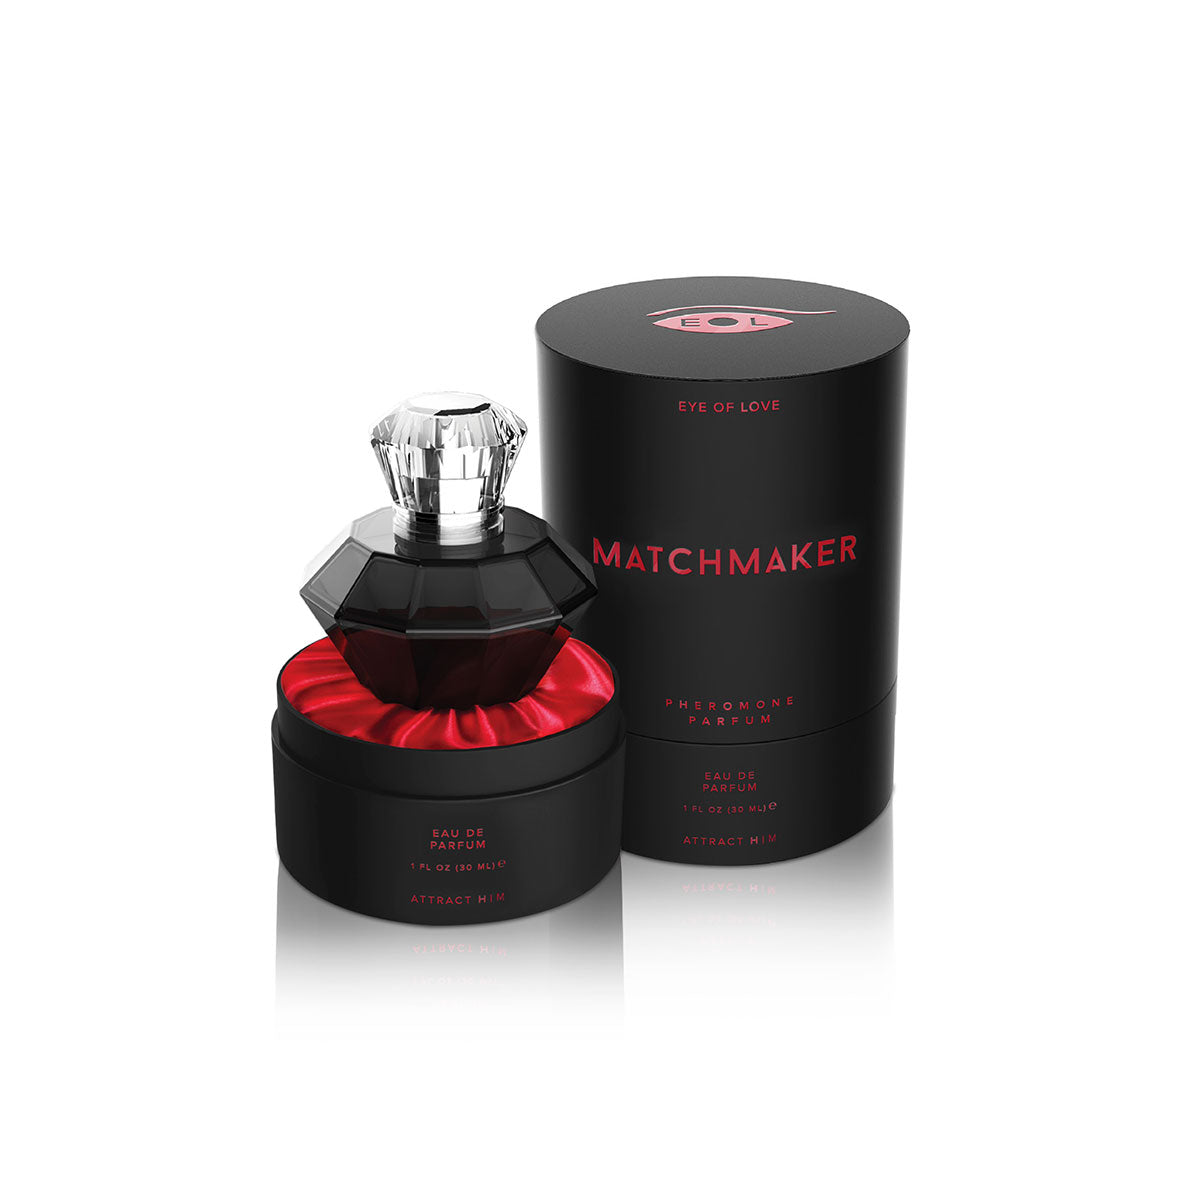 Eye of Love Matchmaker Pheromone Parfum 30ml - Black Diamond (M to M)